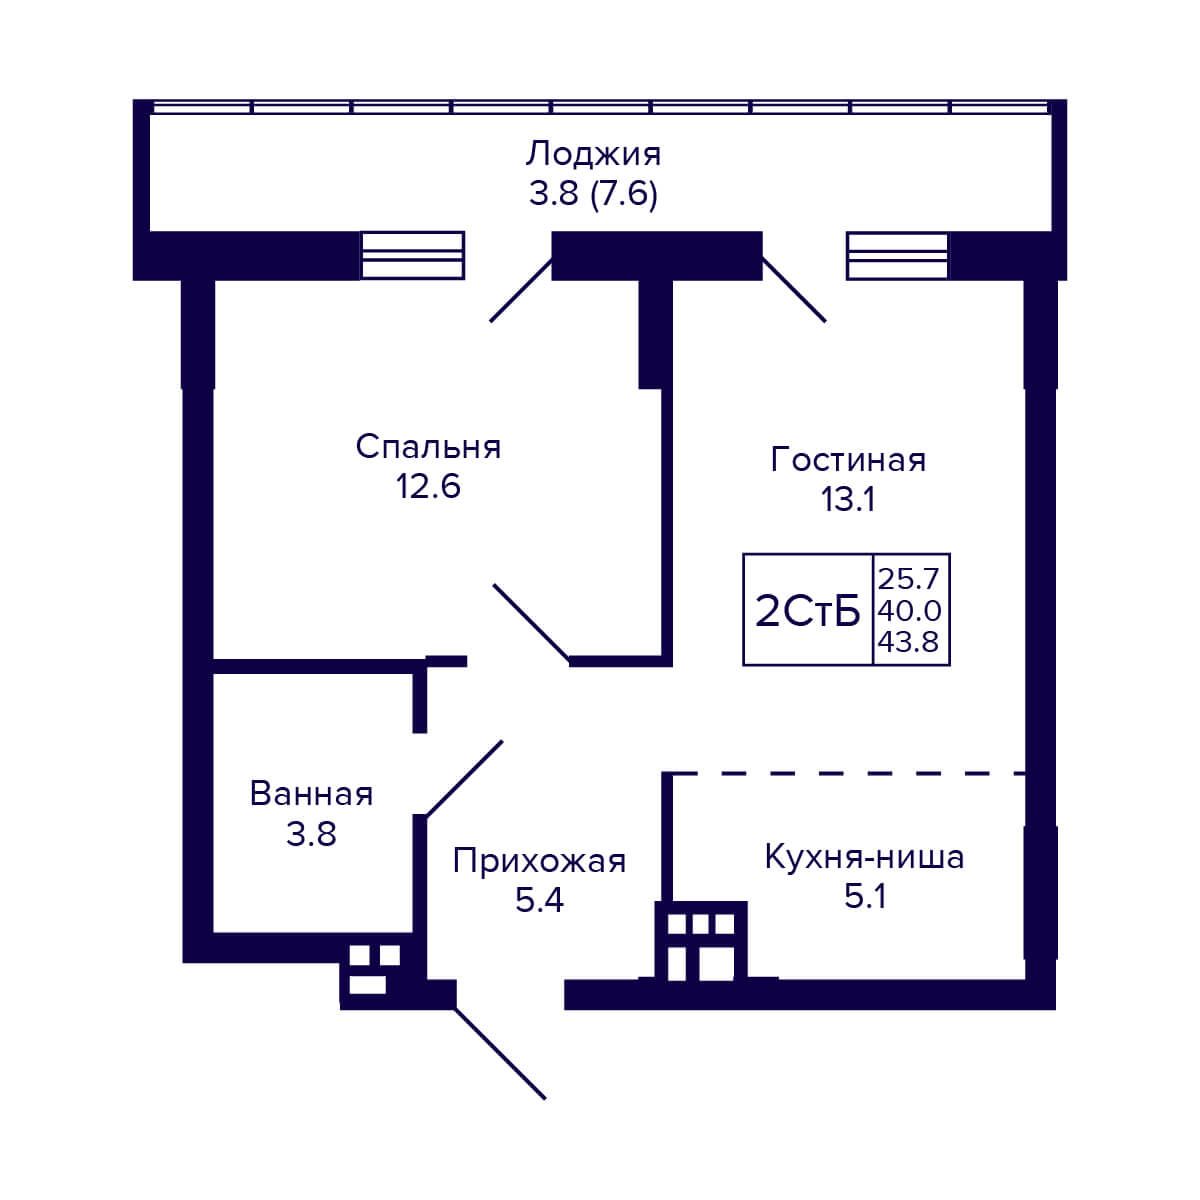 2-комнатная квартира 43.8м2 ЖК Gorizont